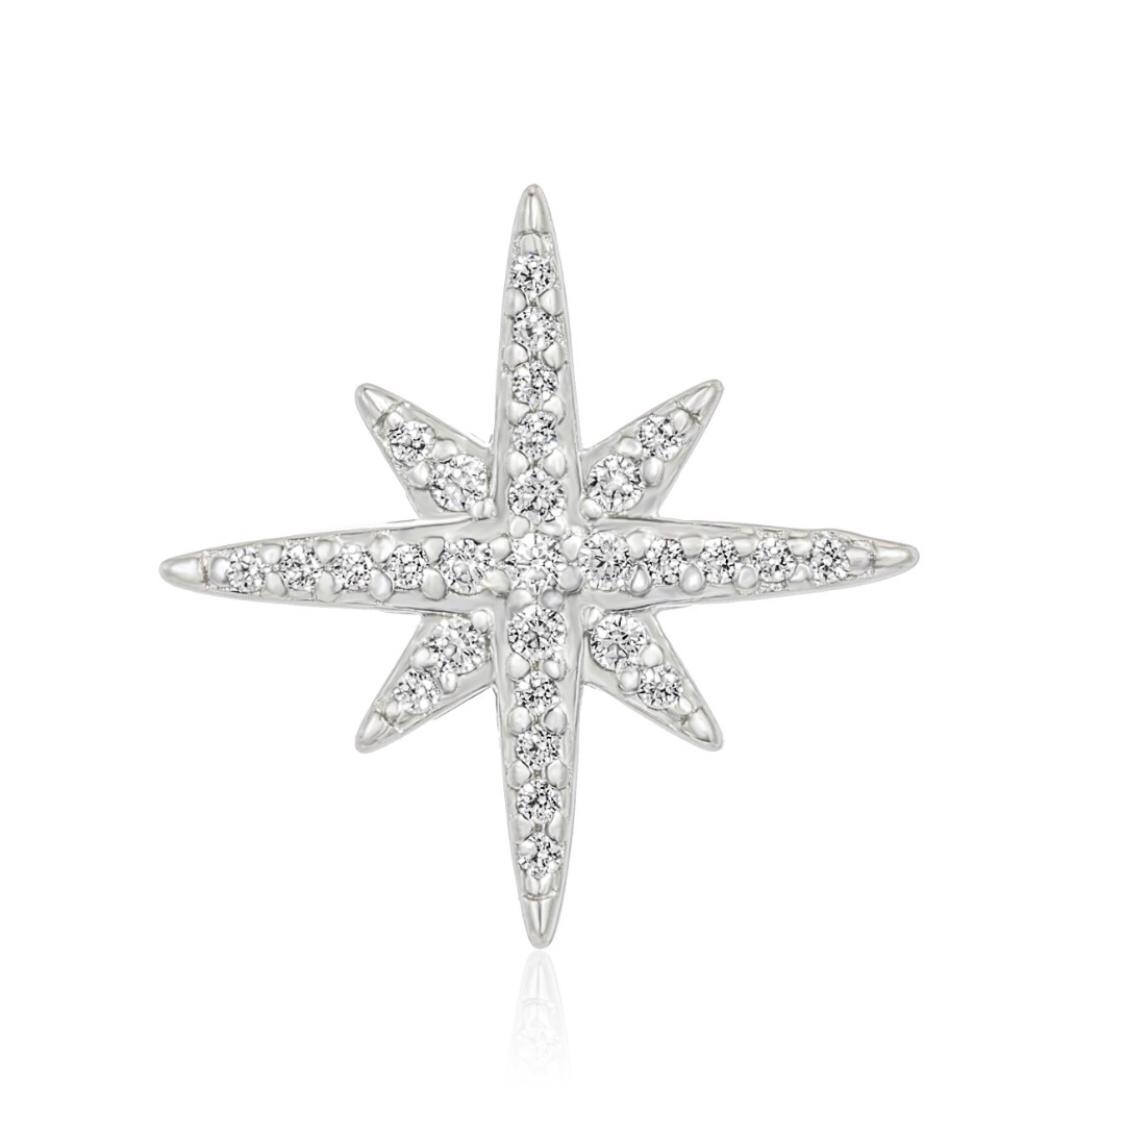 Starburst Stud Earrings/18K White Gold & Cubic Zirconia - infinityXinfinity.co.uk